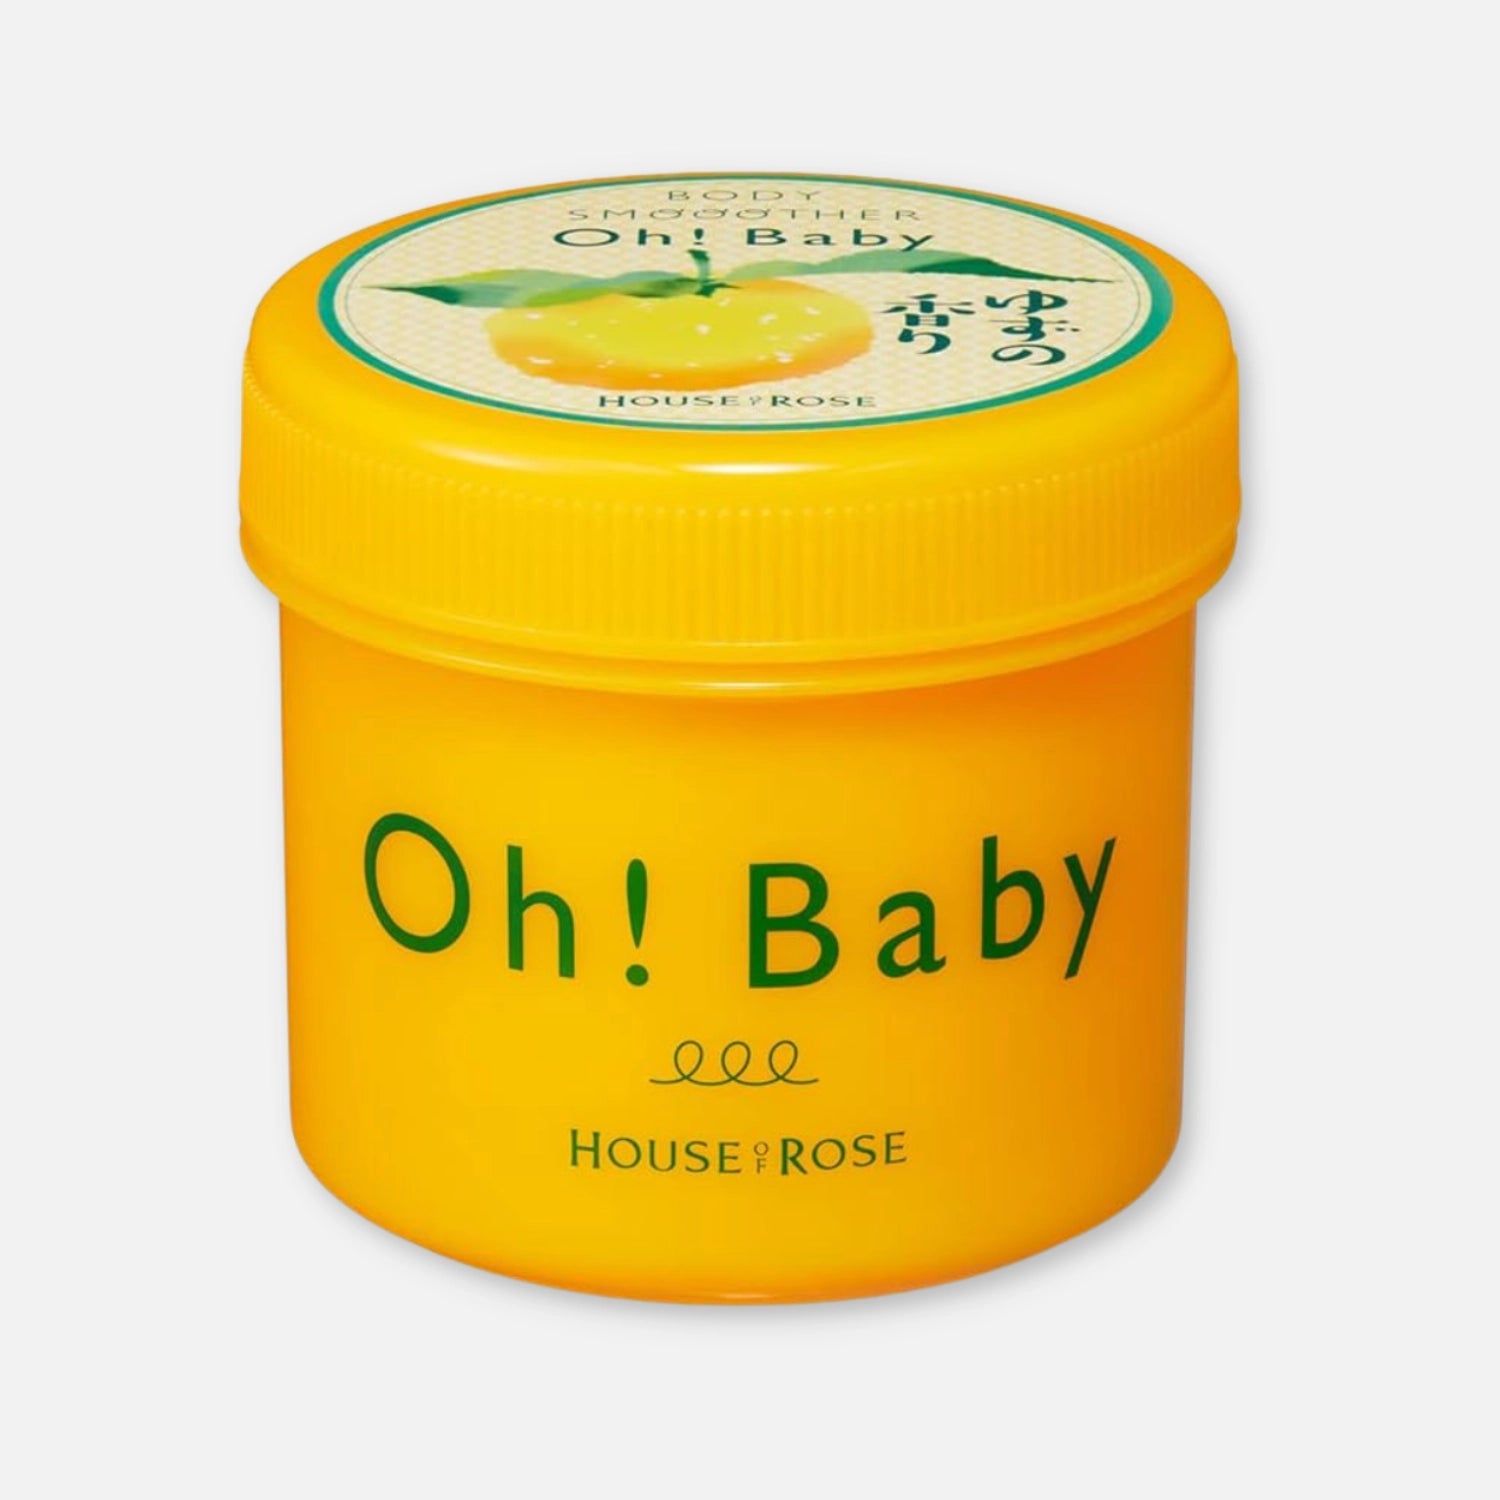 House Of Rose Oh! Baby Body Scrub Smoother Cream Yuzu 200g - Buy ...